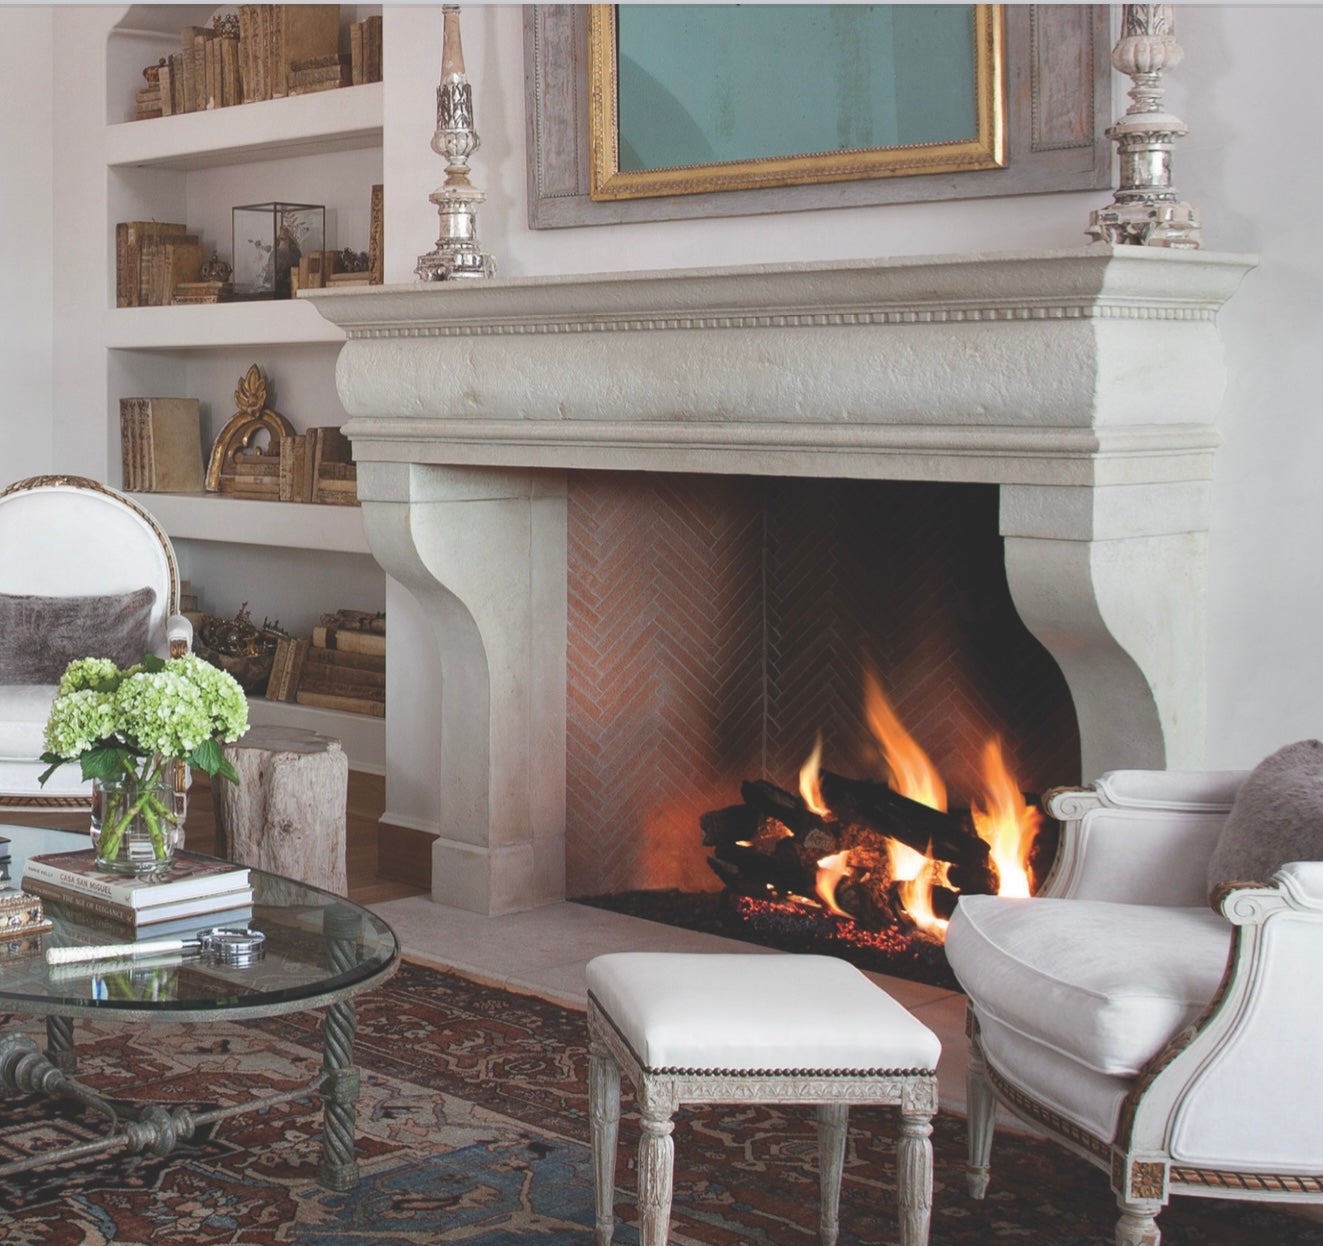 Isokern | WilliamSmith Fireplaces in North Charleston SC